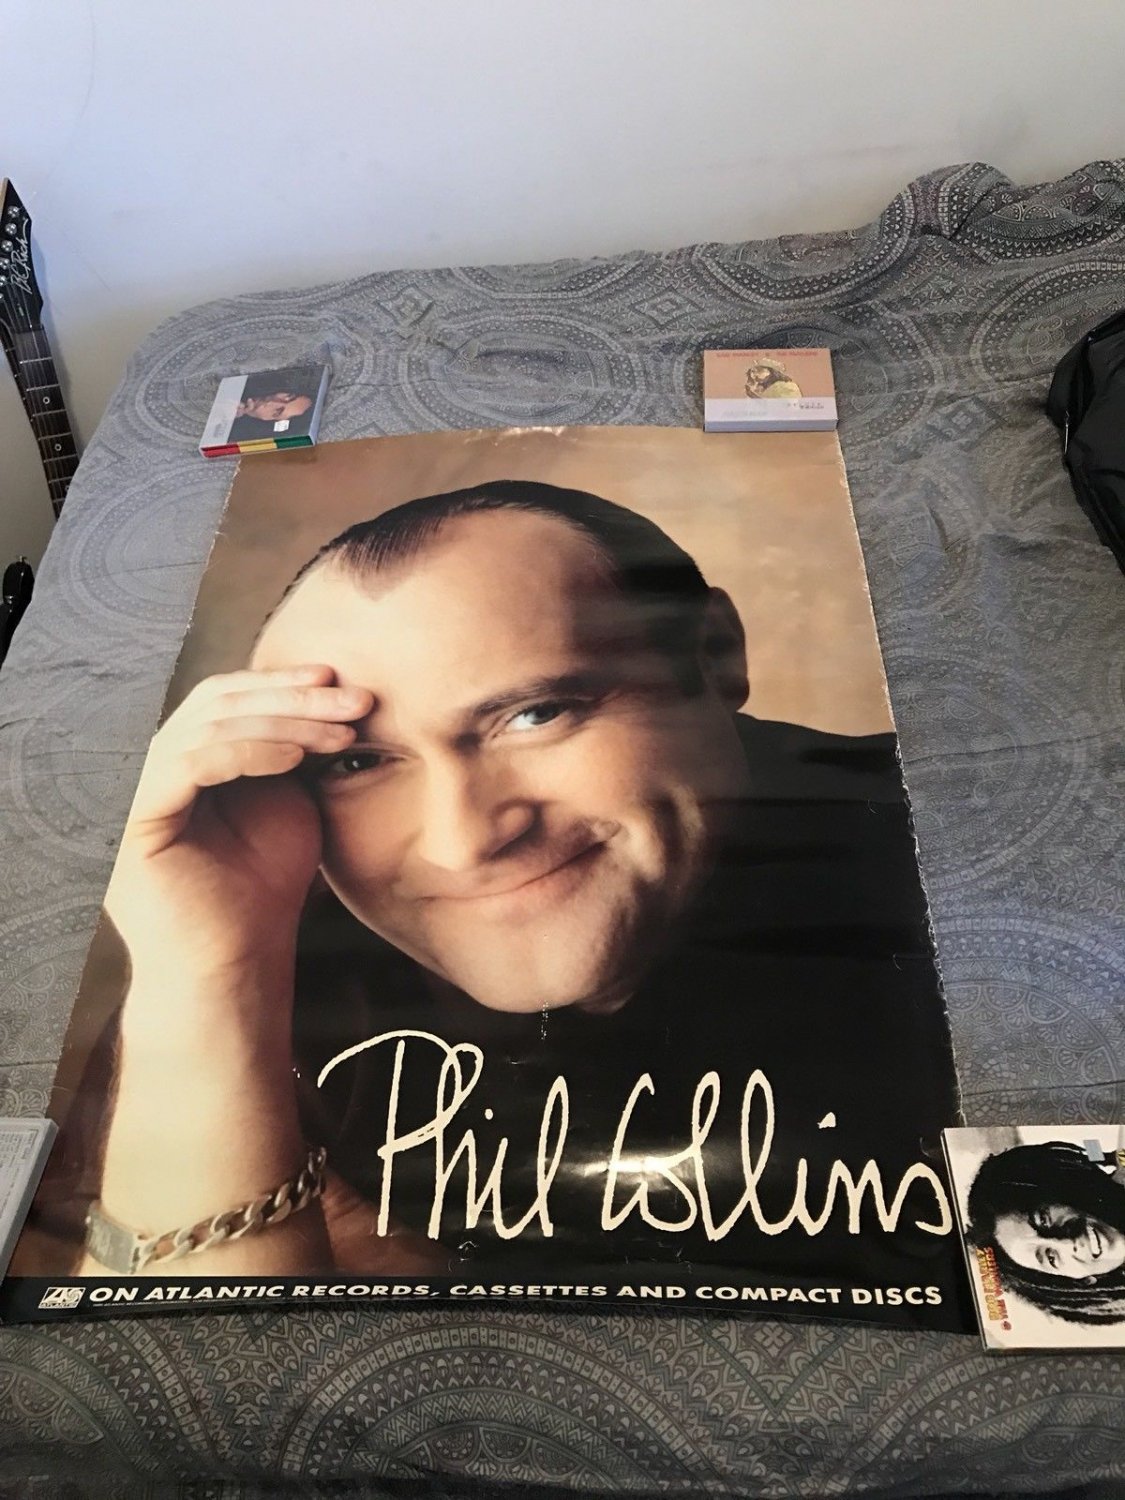 genesis] phil collins 1989 promo poster